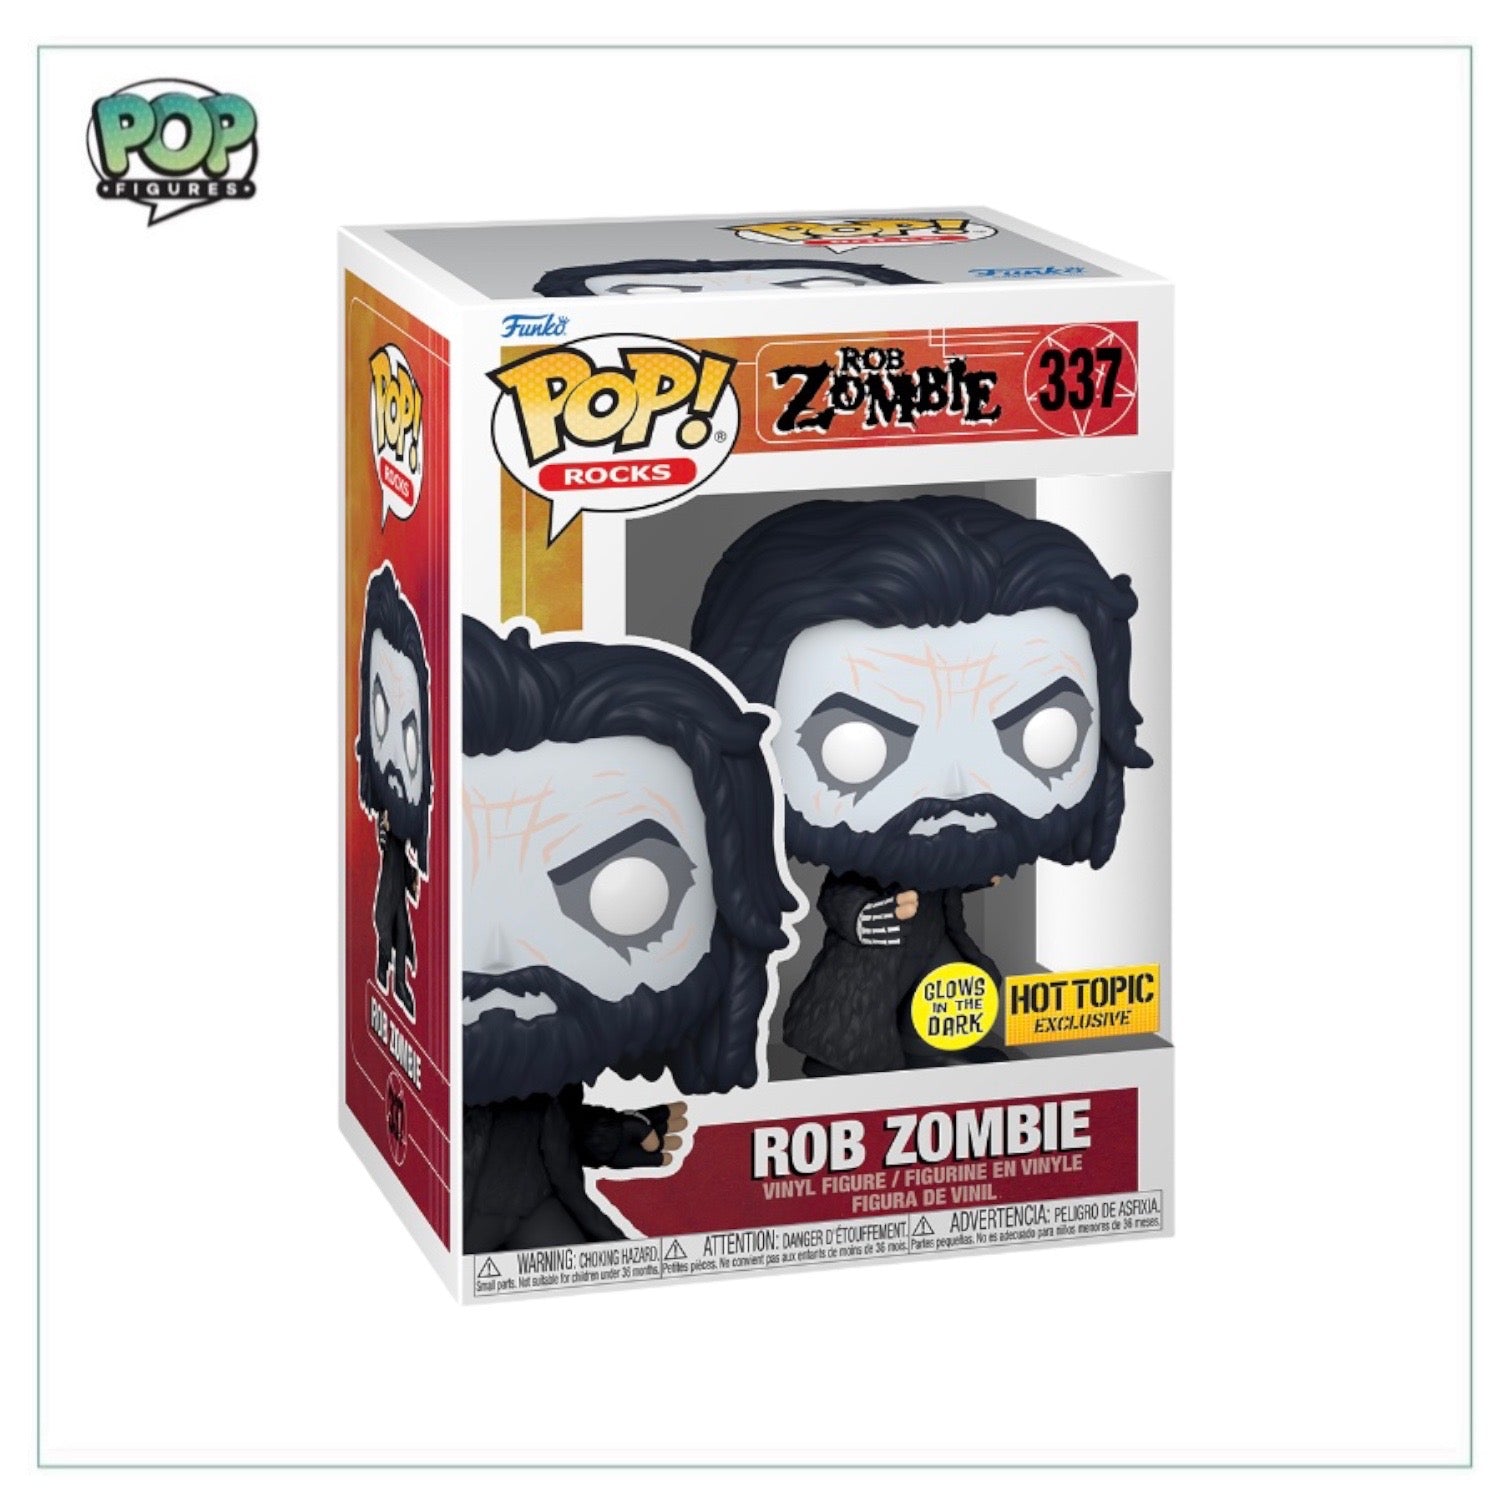 Rob Zombie #337 (Glows in the Dark) Funko Pop! - Rock - Hot Topic Exclusive